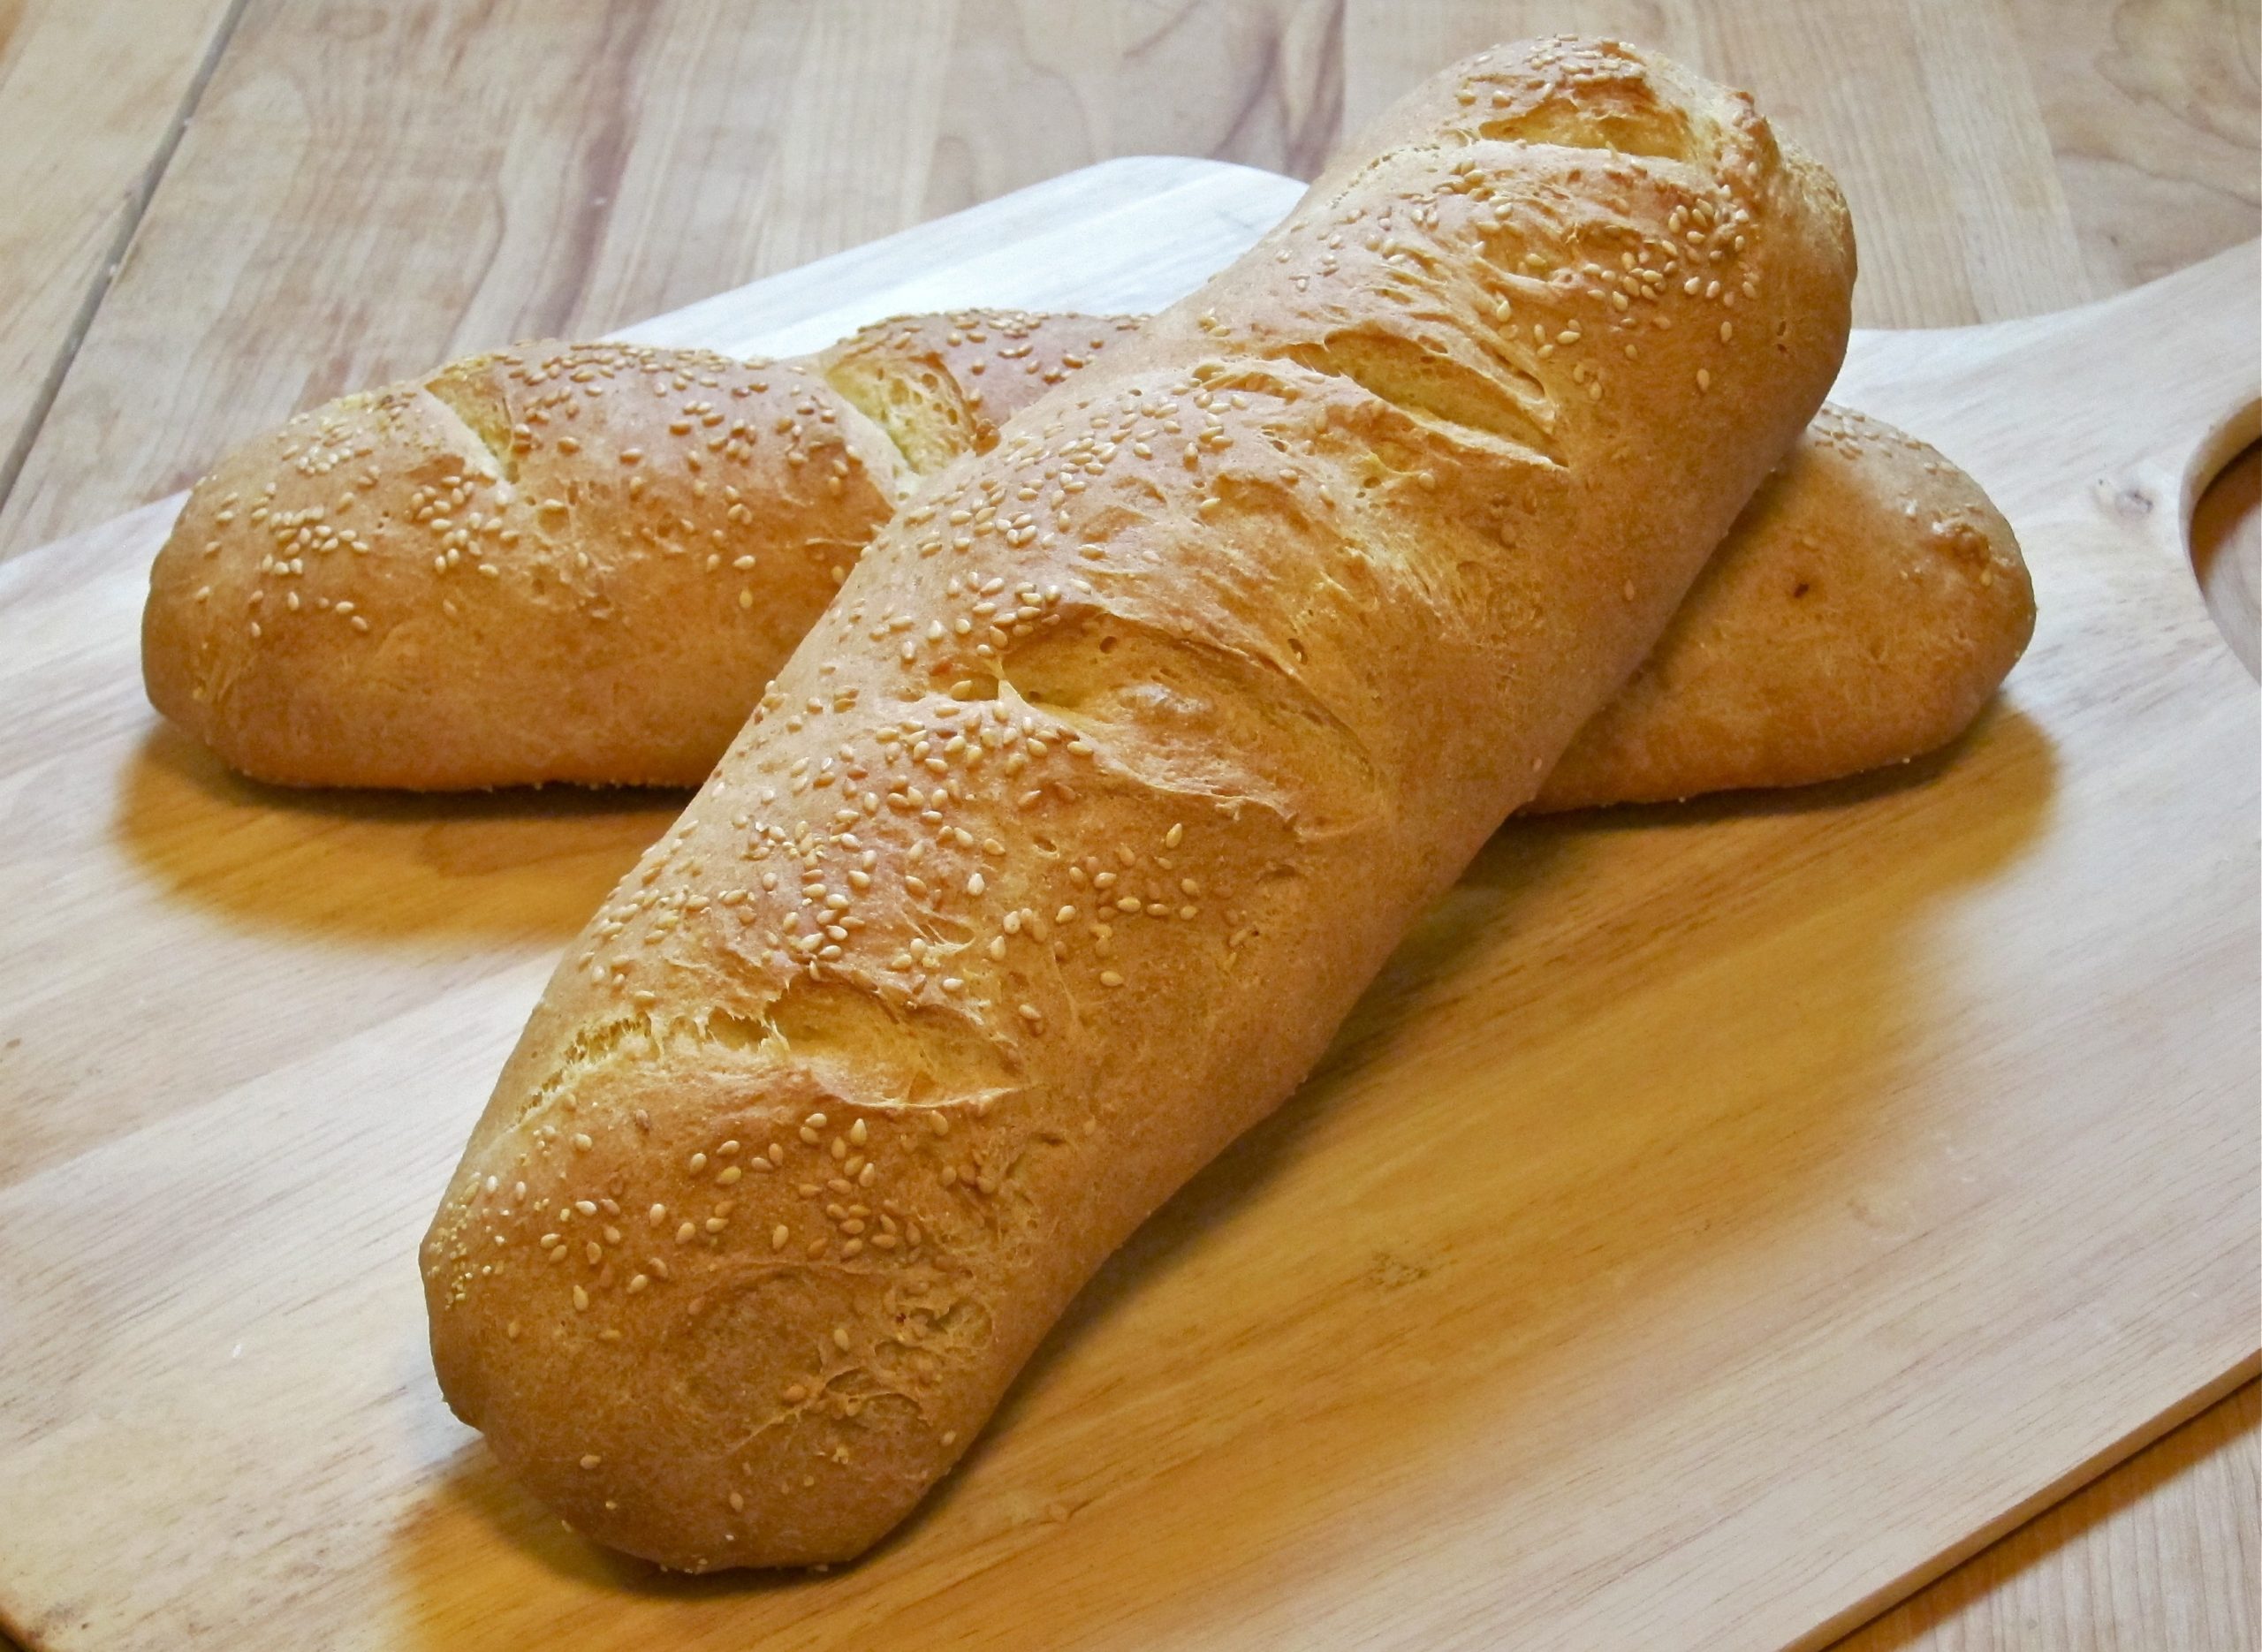 Weeknight Semolina Bread baked in a cloche - Bread Experience